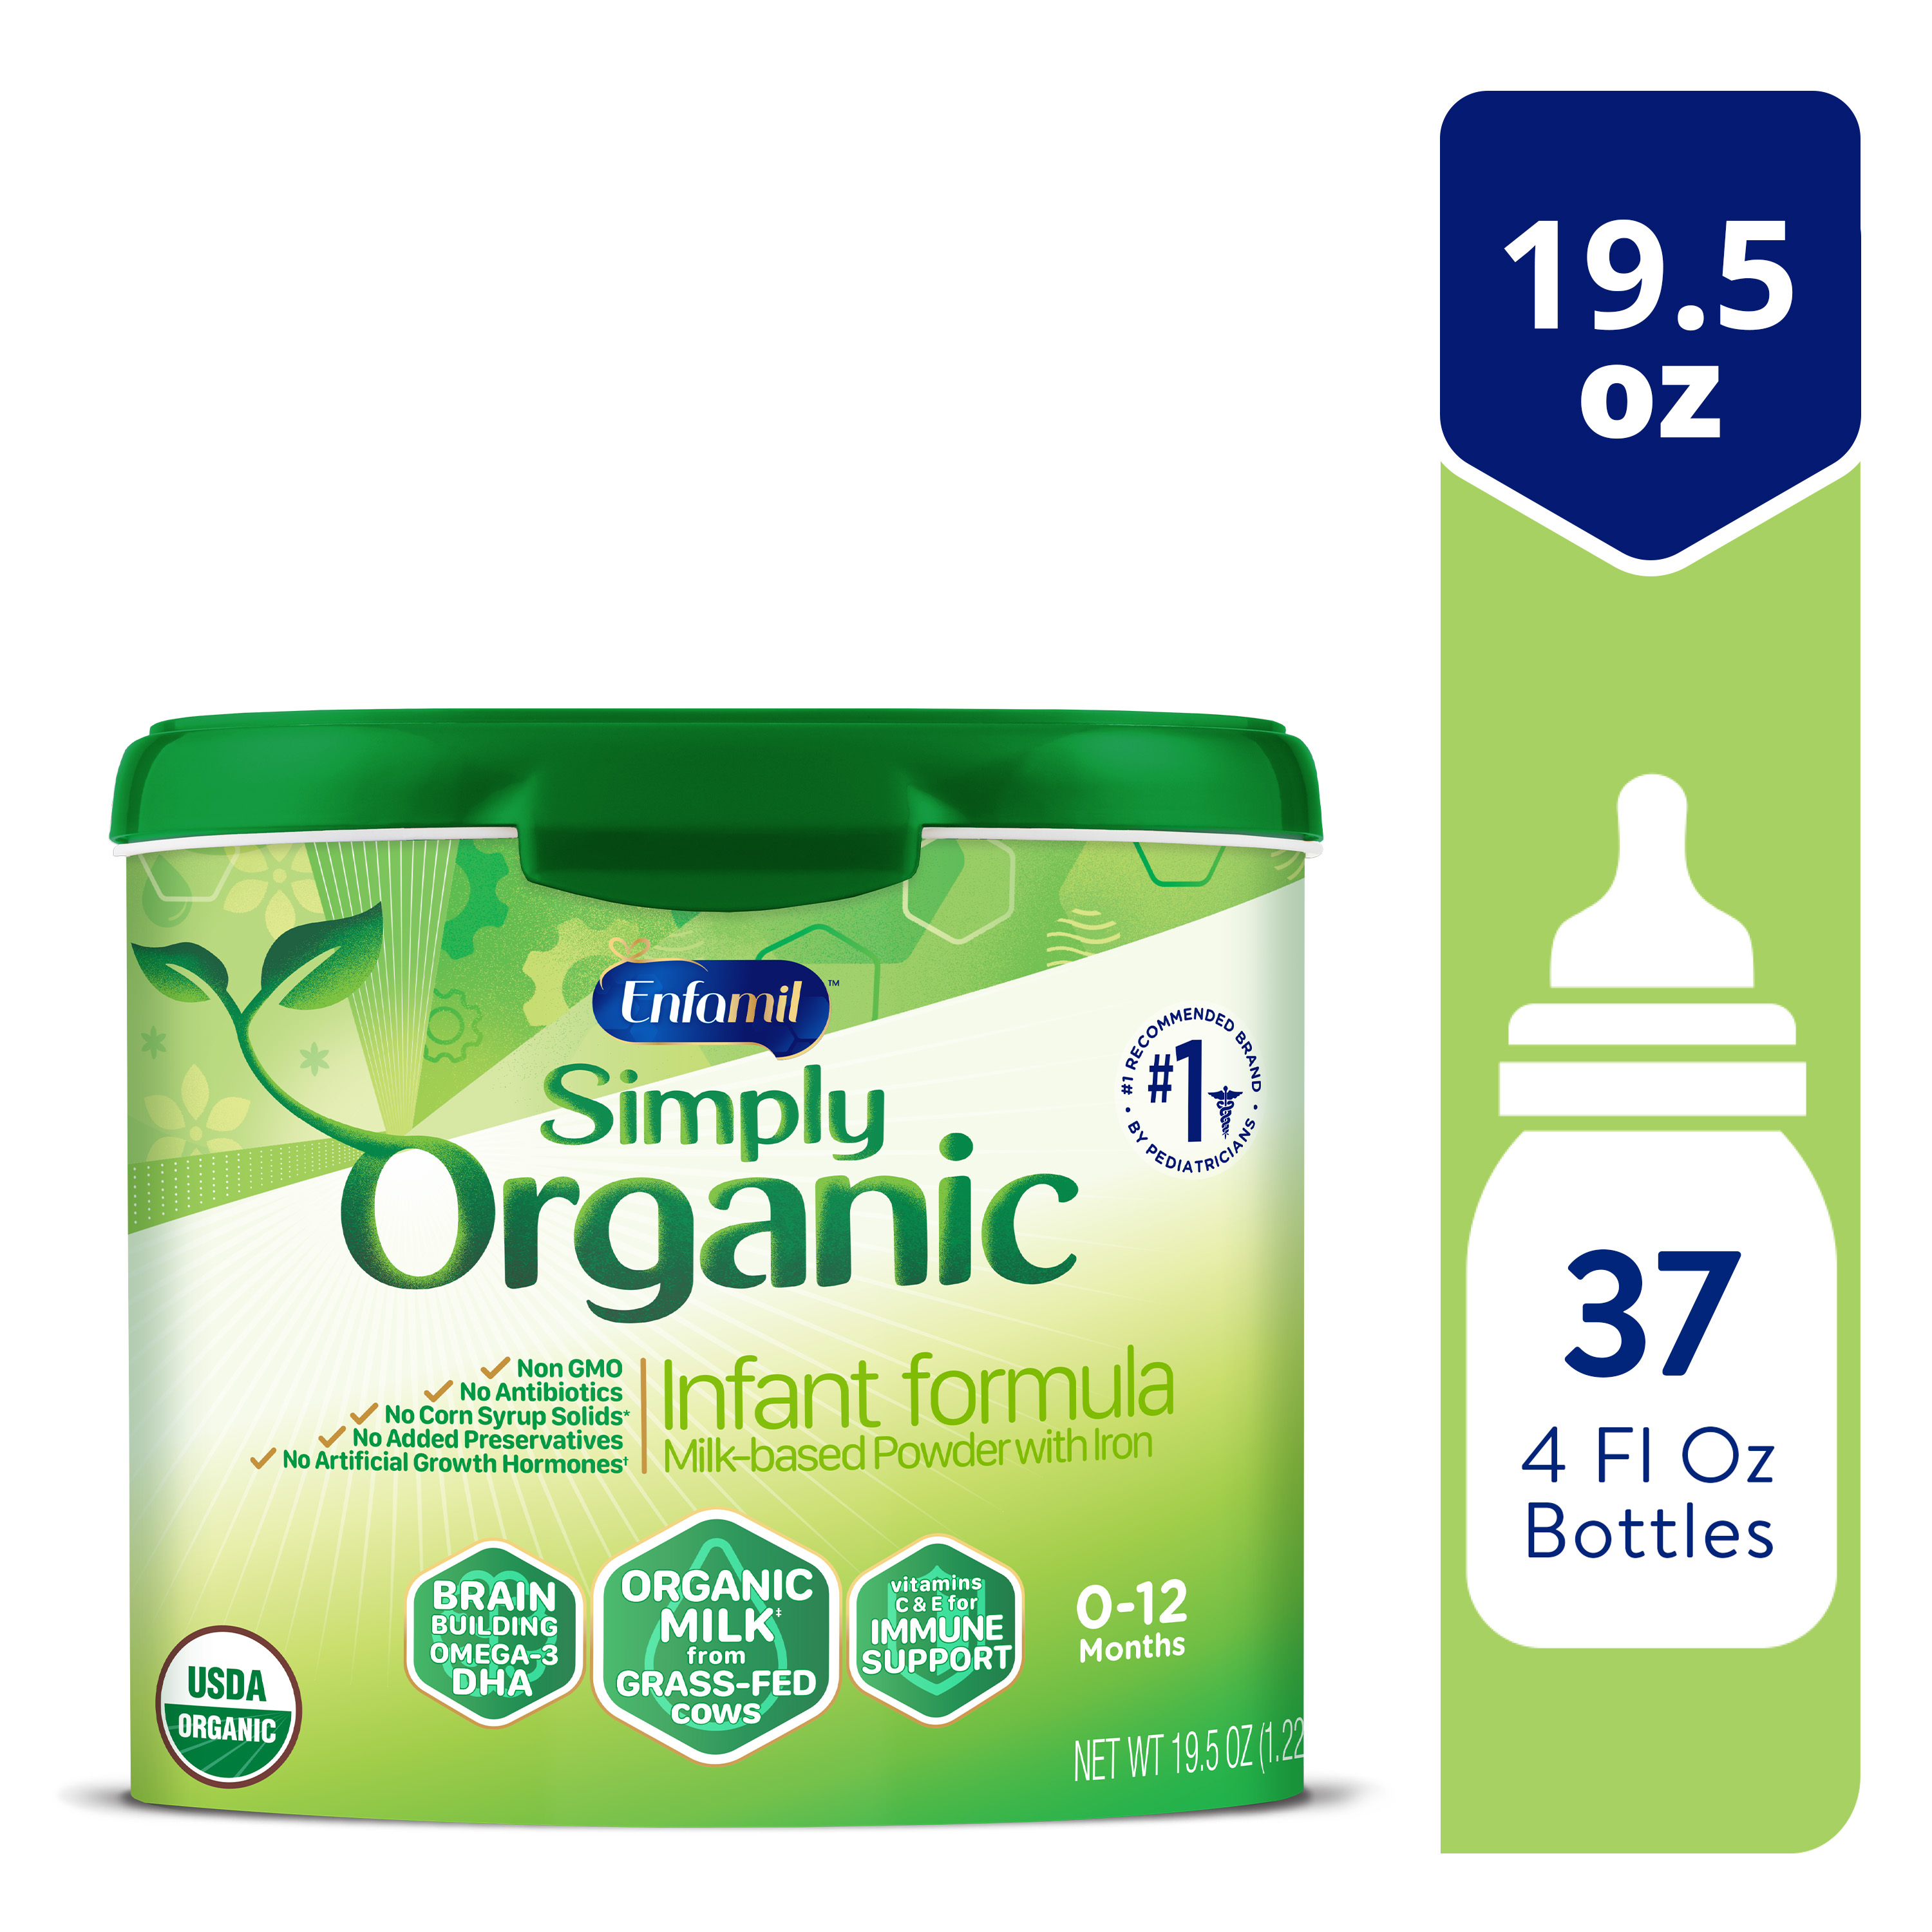 Organic Baby Formula Simply Organic by Enfamil, No Corn Syrup, Organic Milk from Grass-Fed Cows, Milk-Based Powder with Iron, Non-GMO, Powder Tub, 19.5 Oz - image 1 of 18